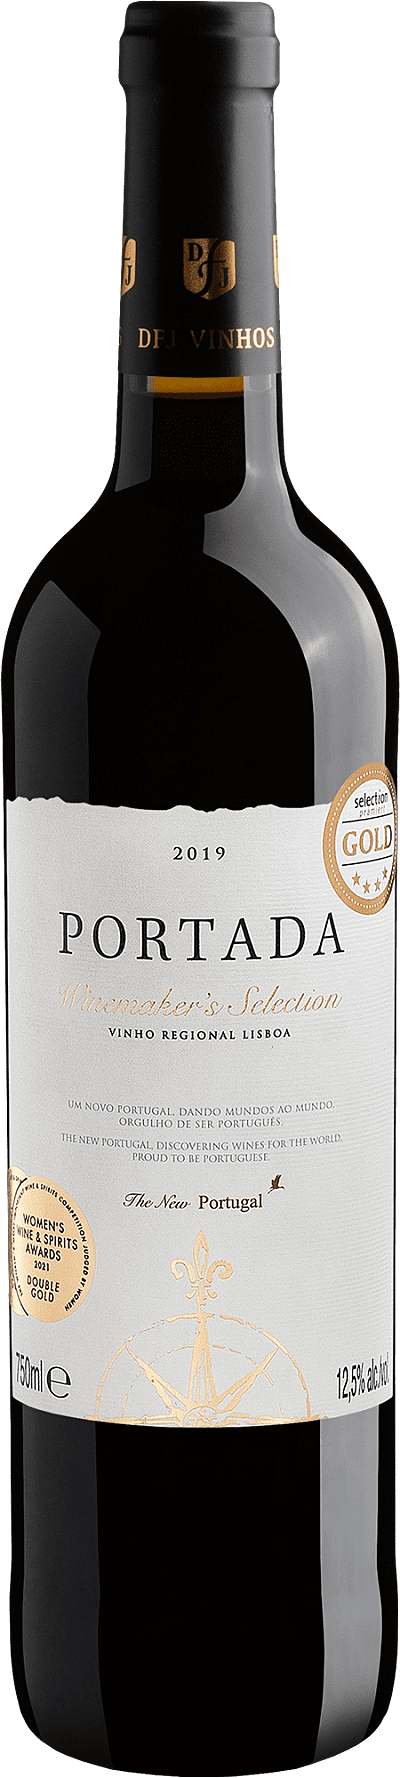 Portada Winemaker's Selection 2019 - Portugal